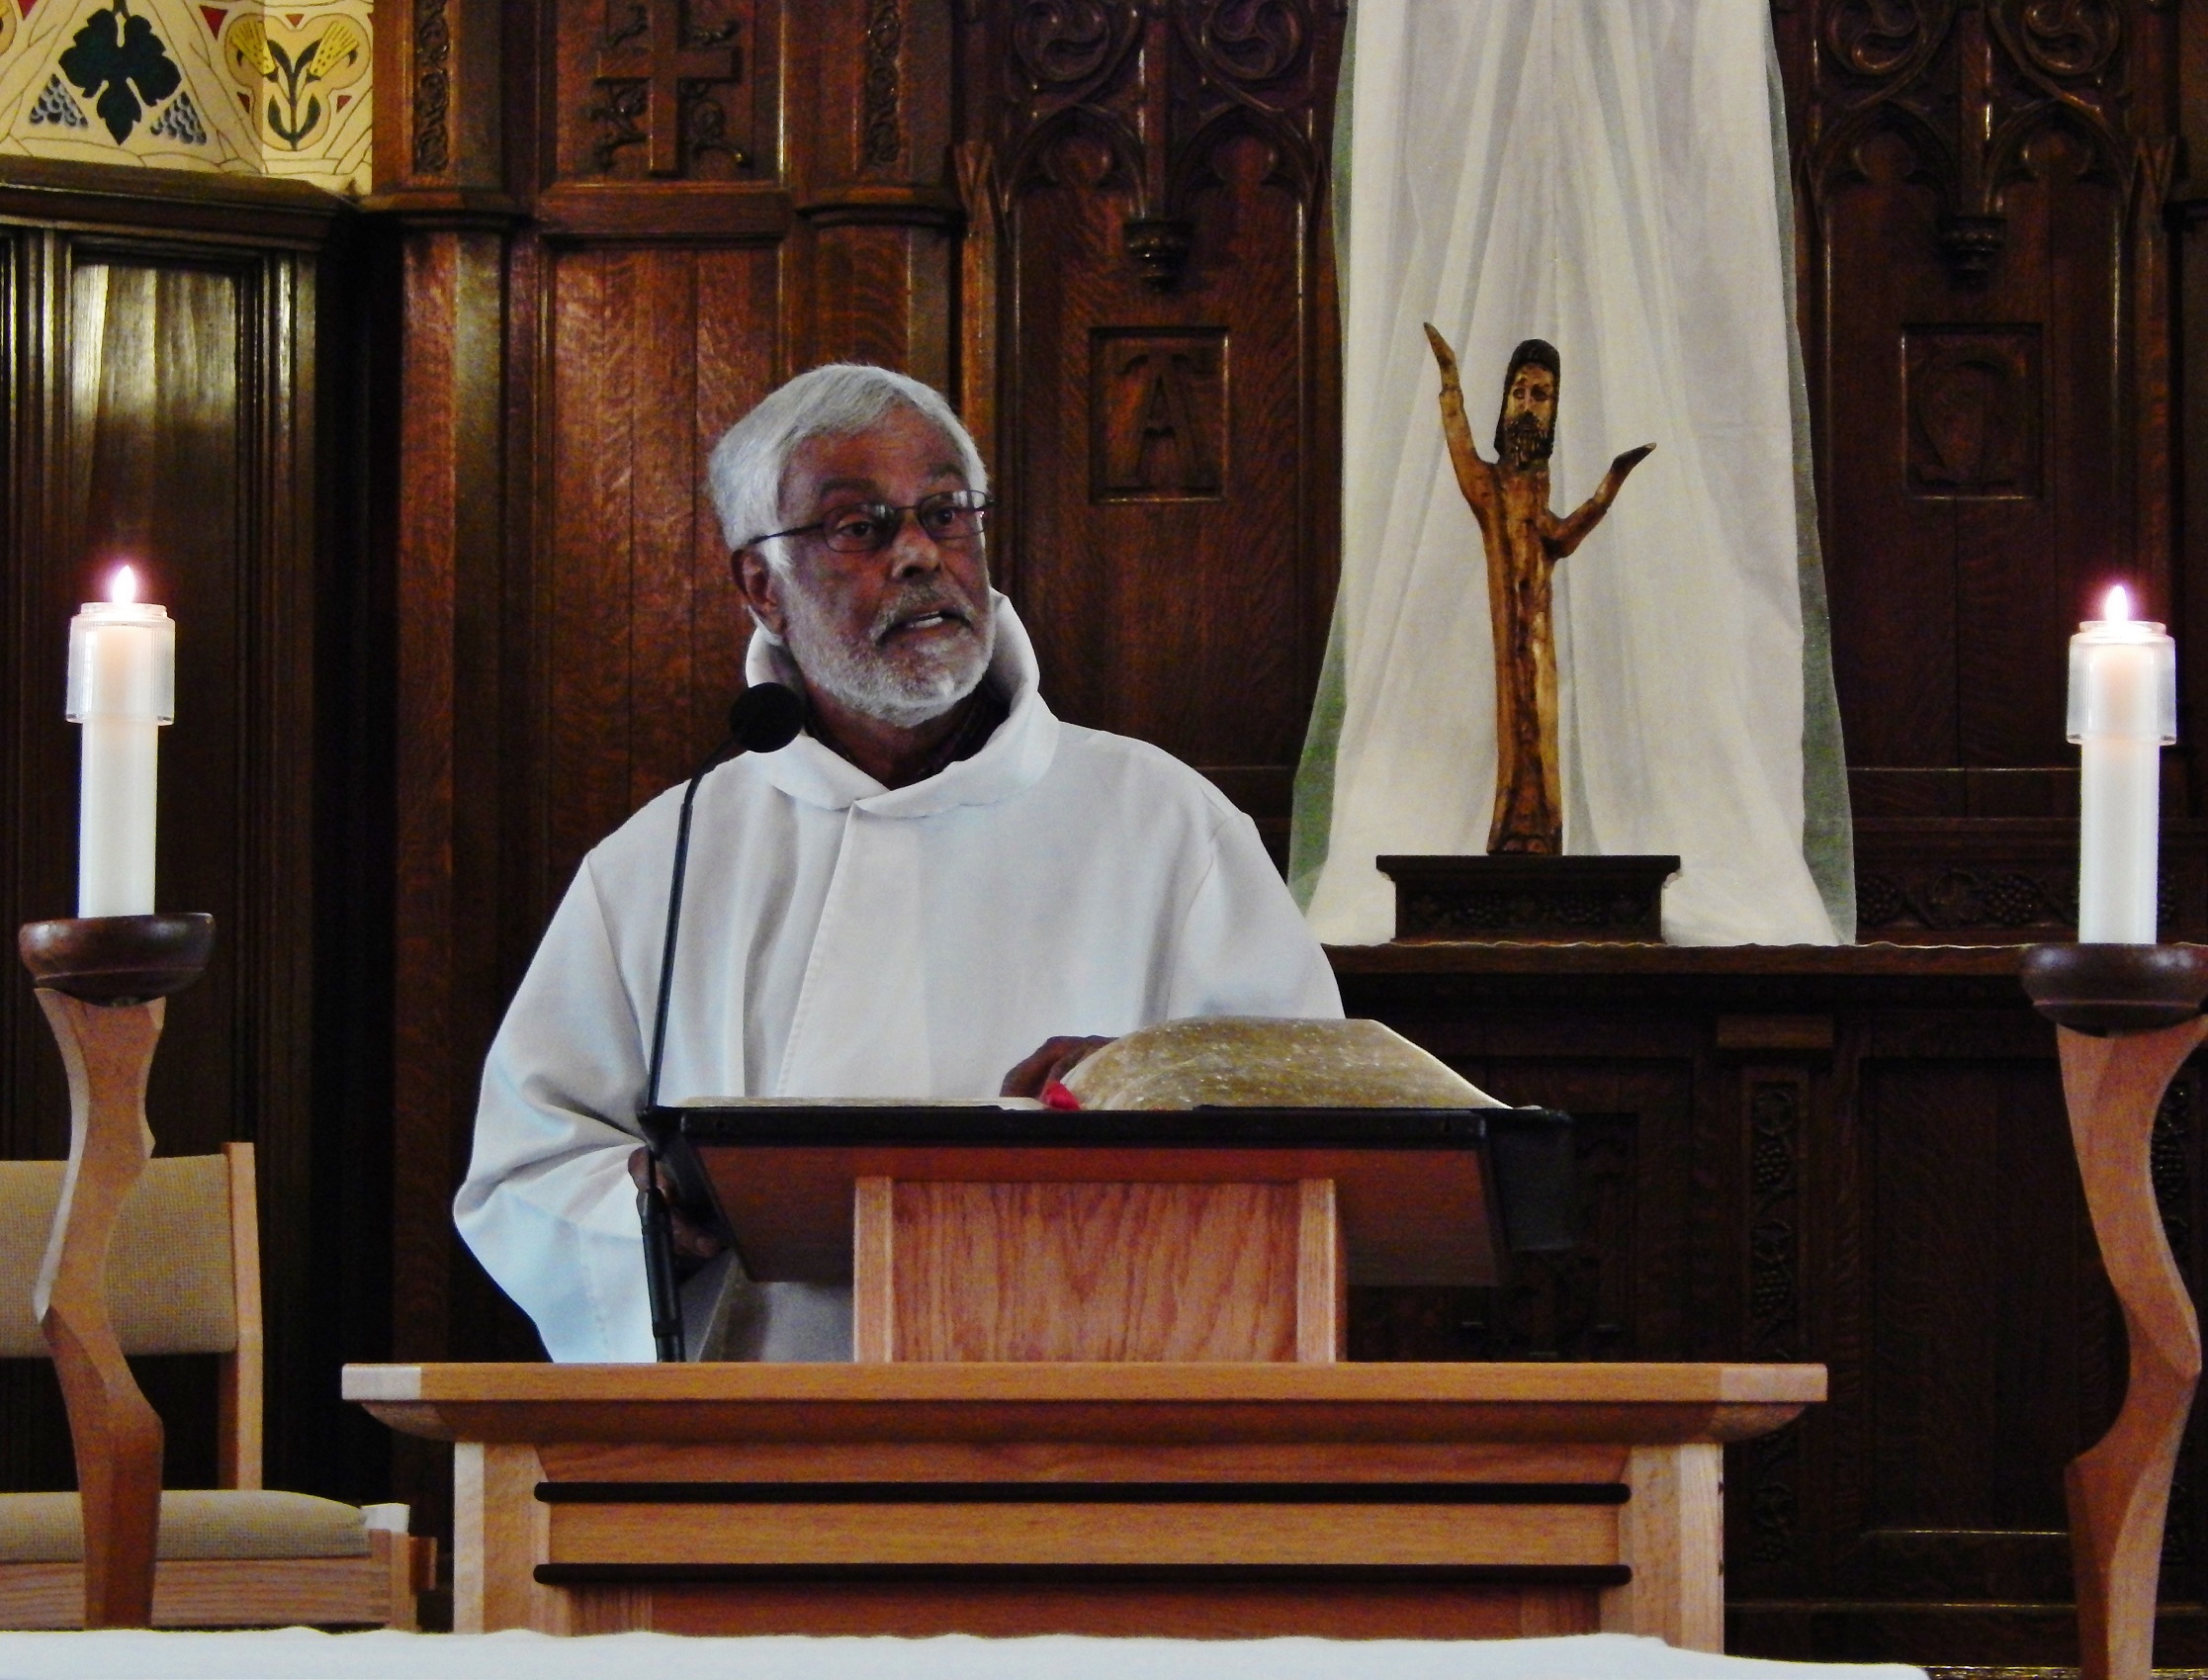 Rev. Dr. Winston Persaud May 9, 2018